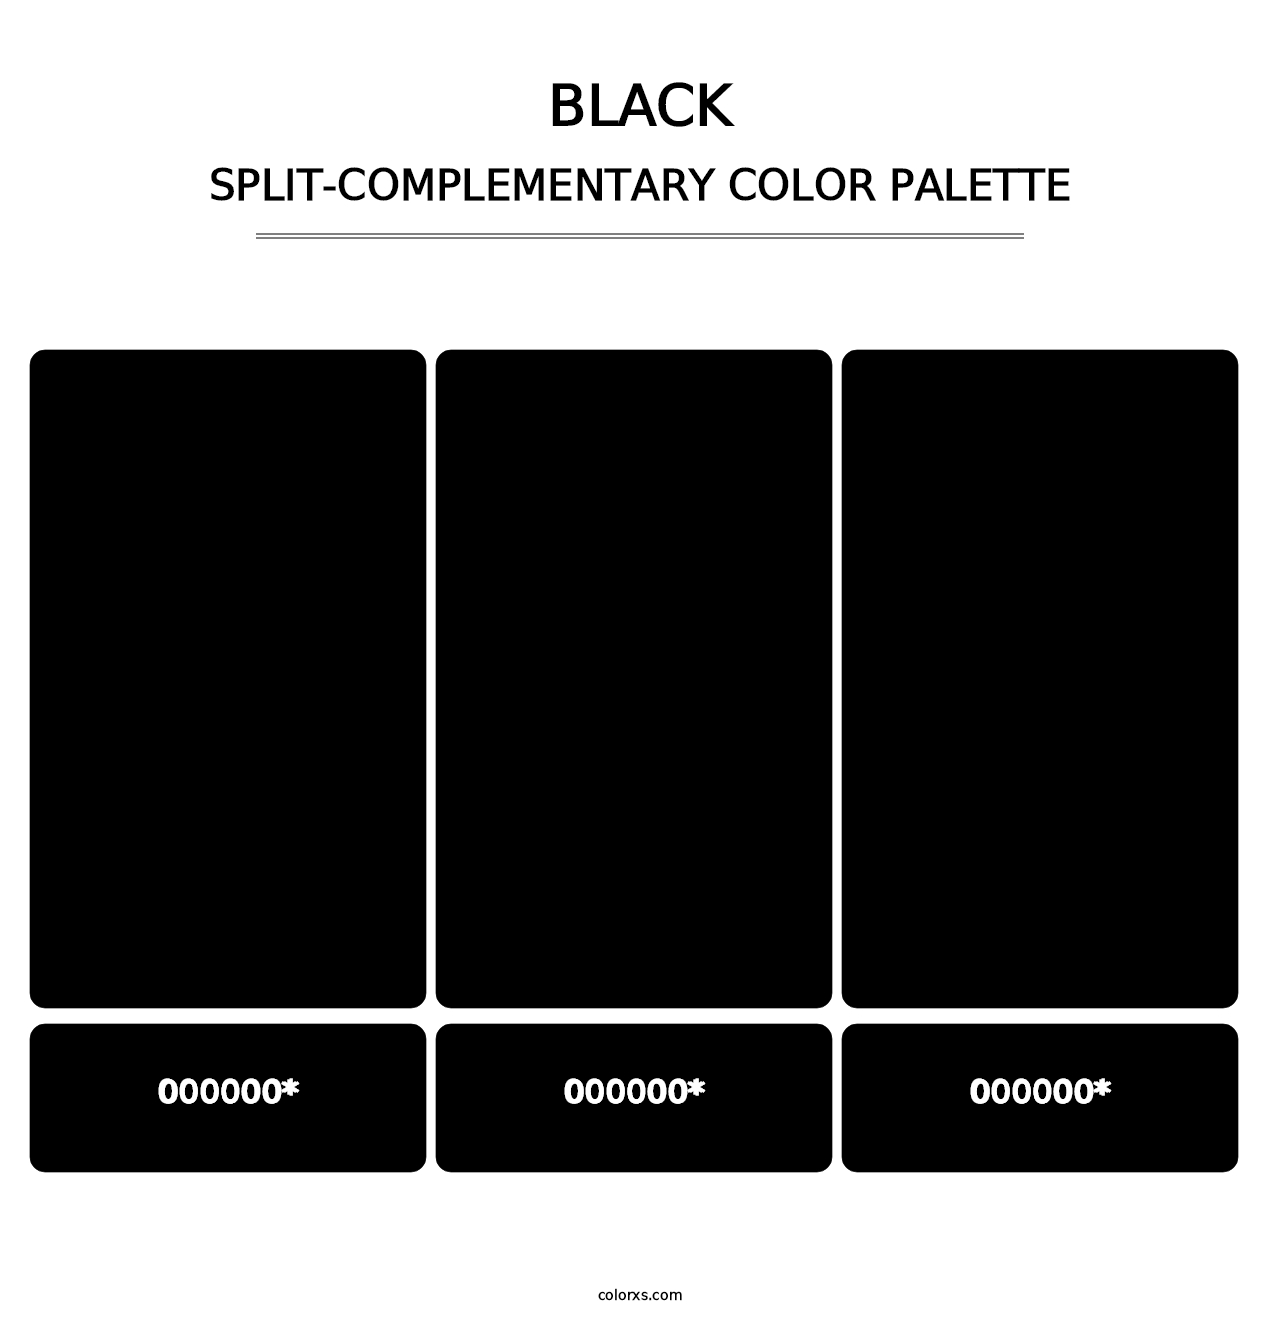 Black - Split-Complementary Color Palette